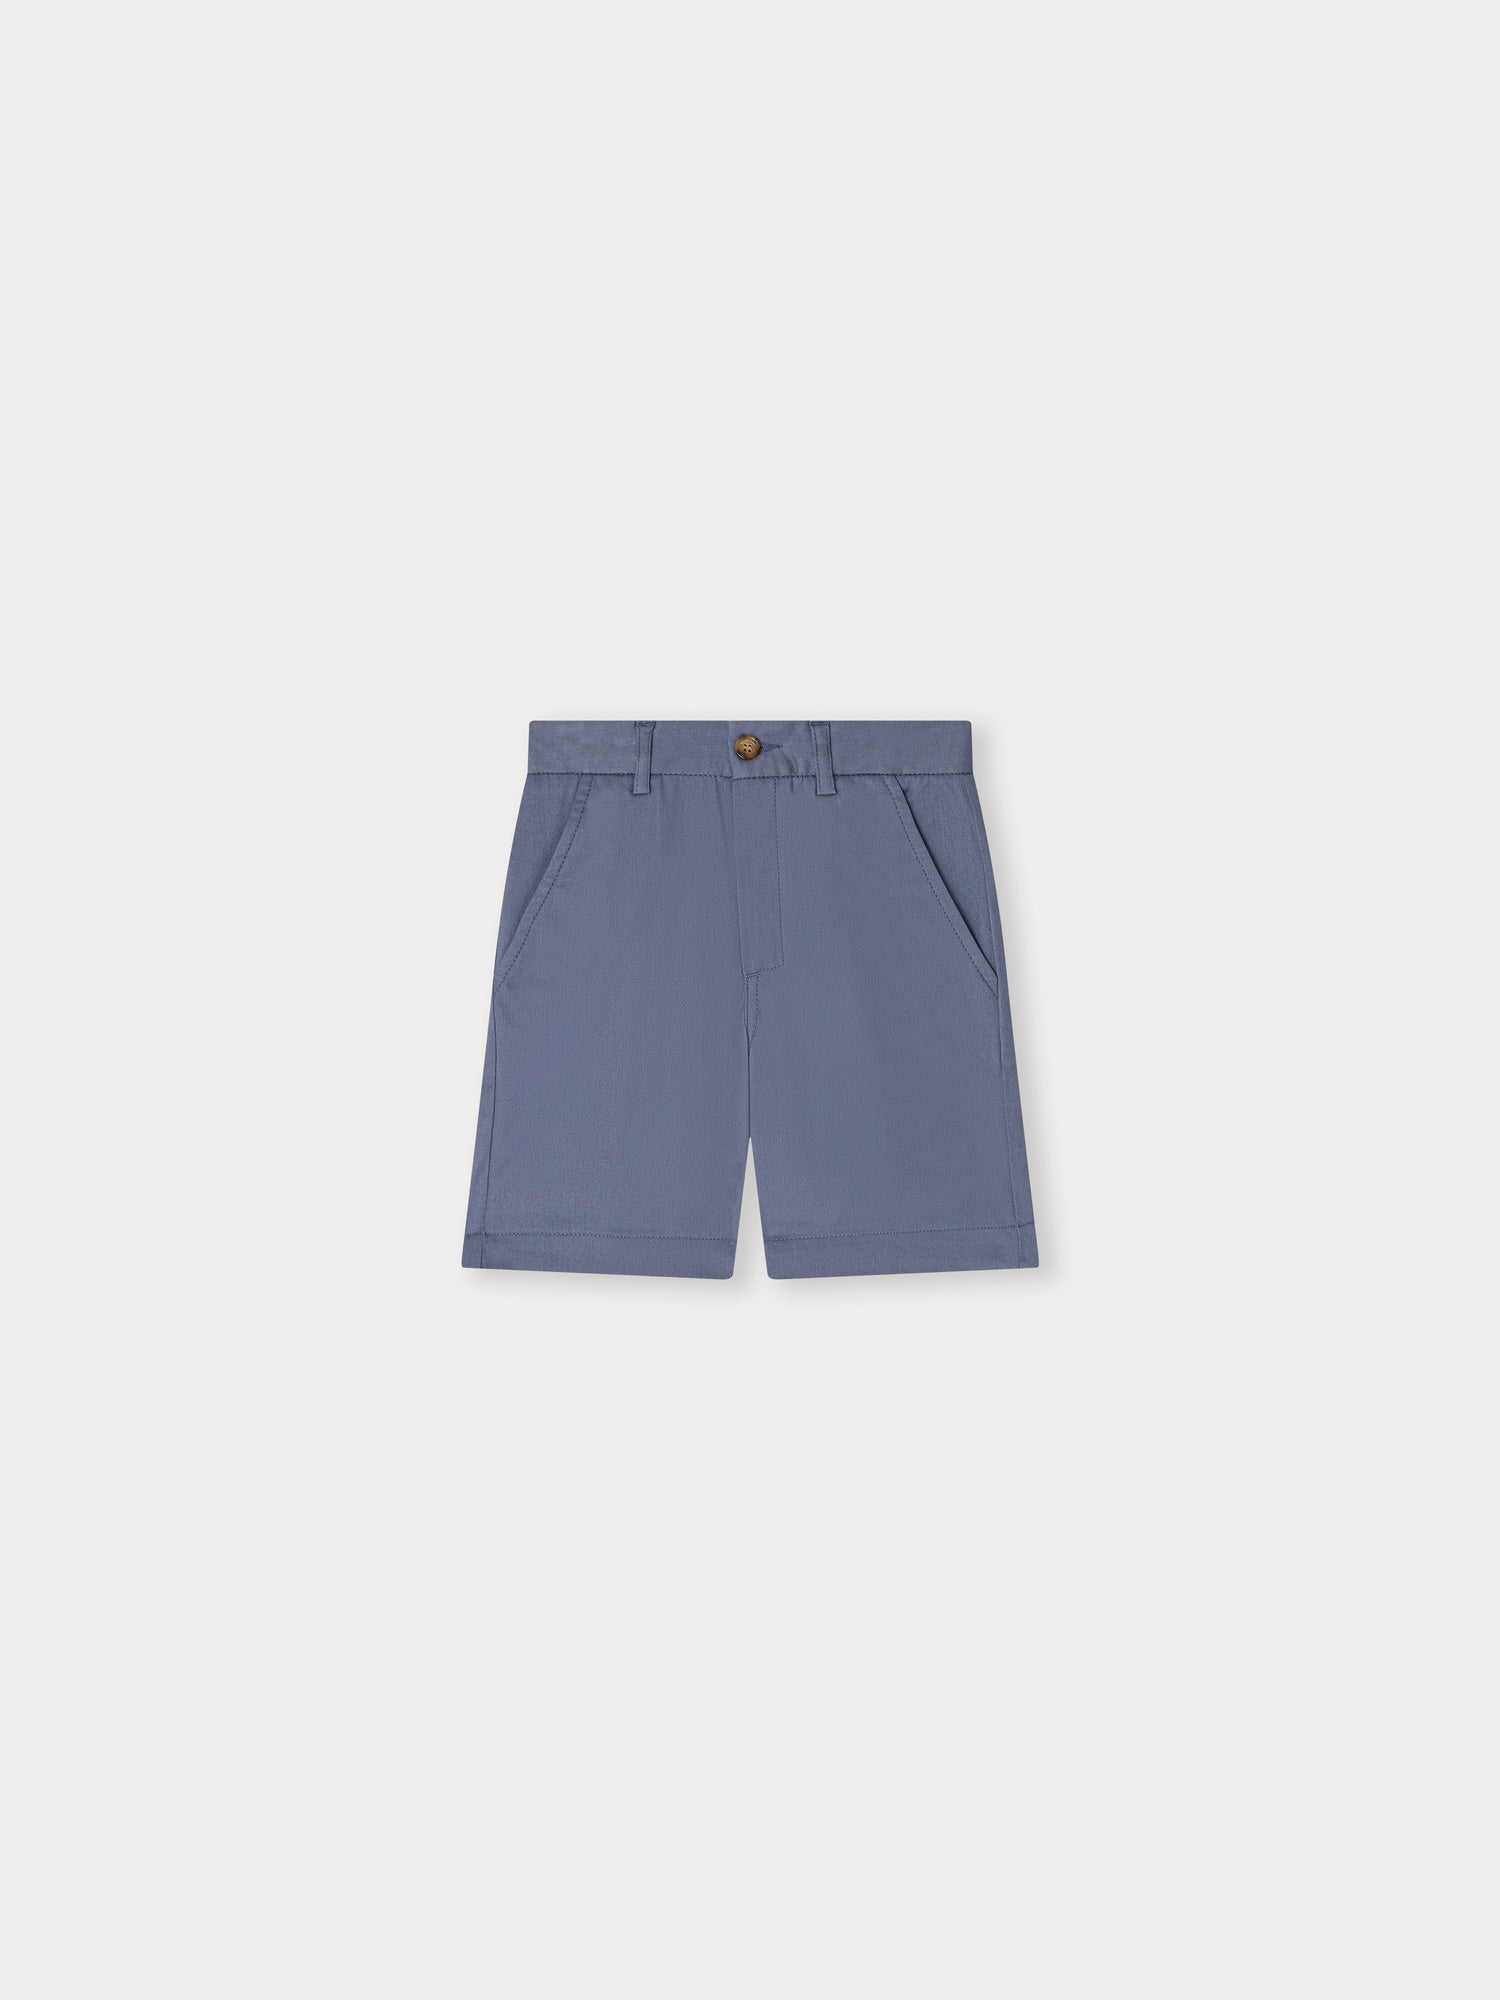 Bonpoint Calvin cotton chino shorts - Blue